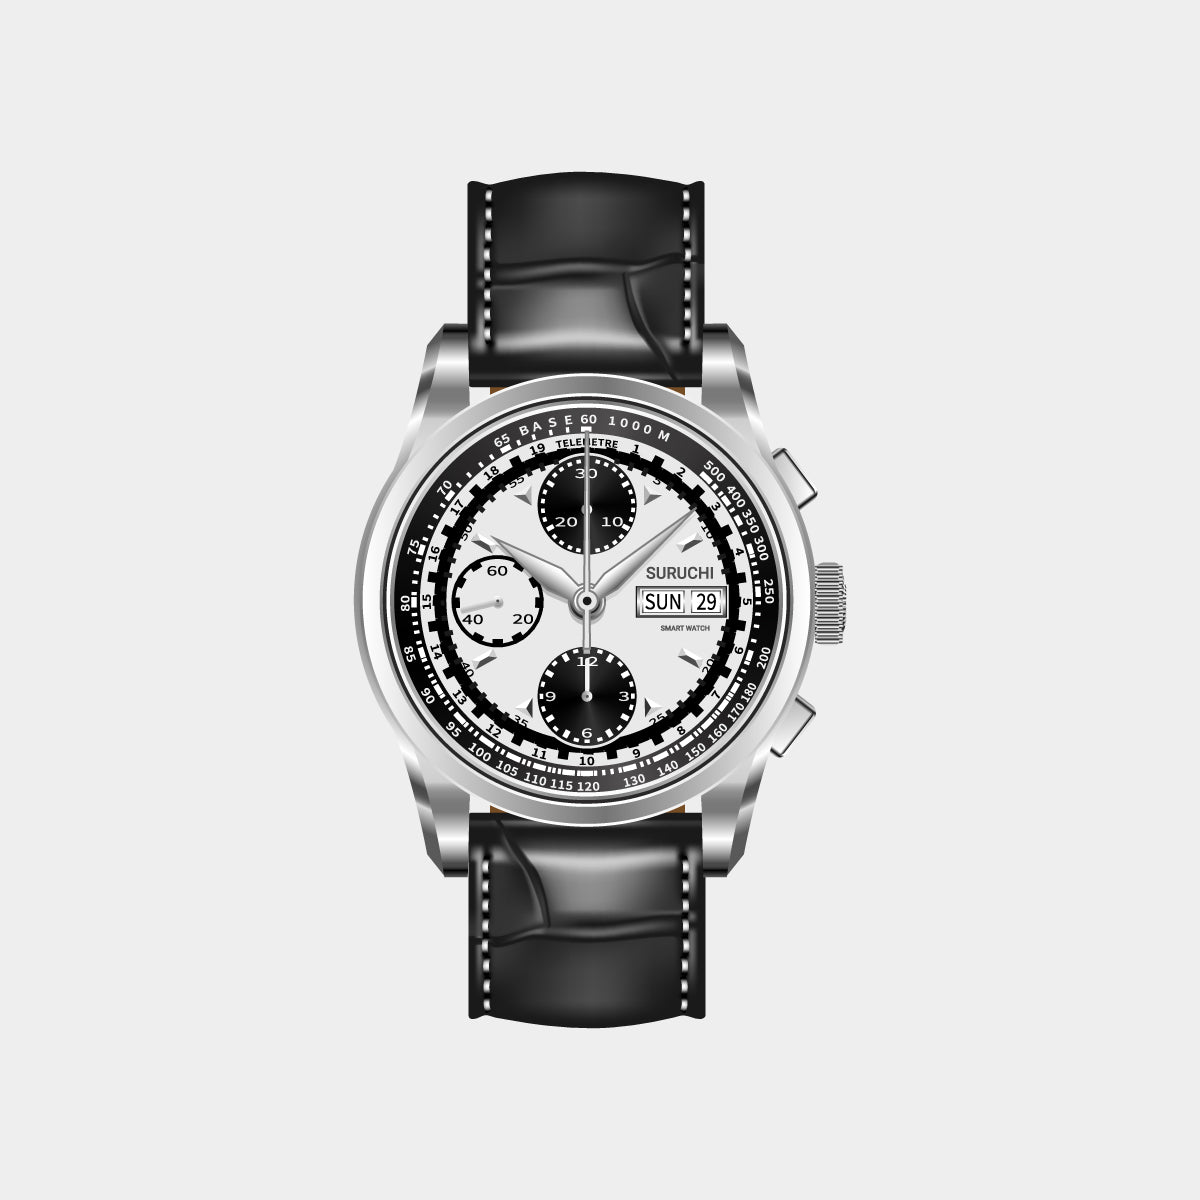 Time Elegance fictional watch